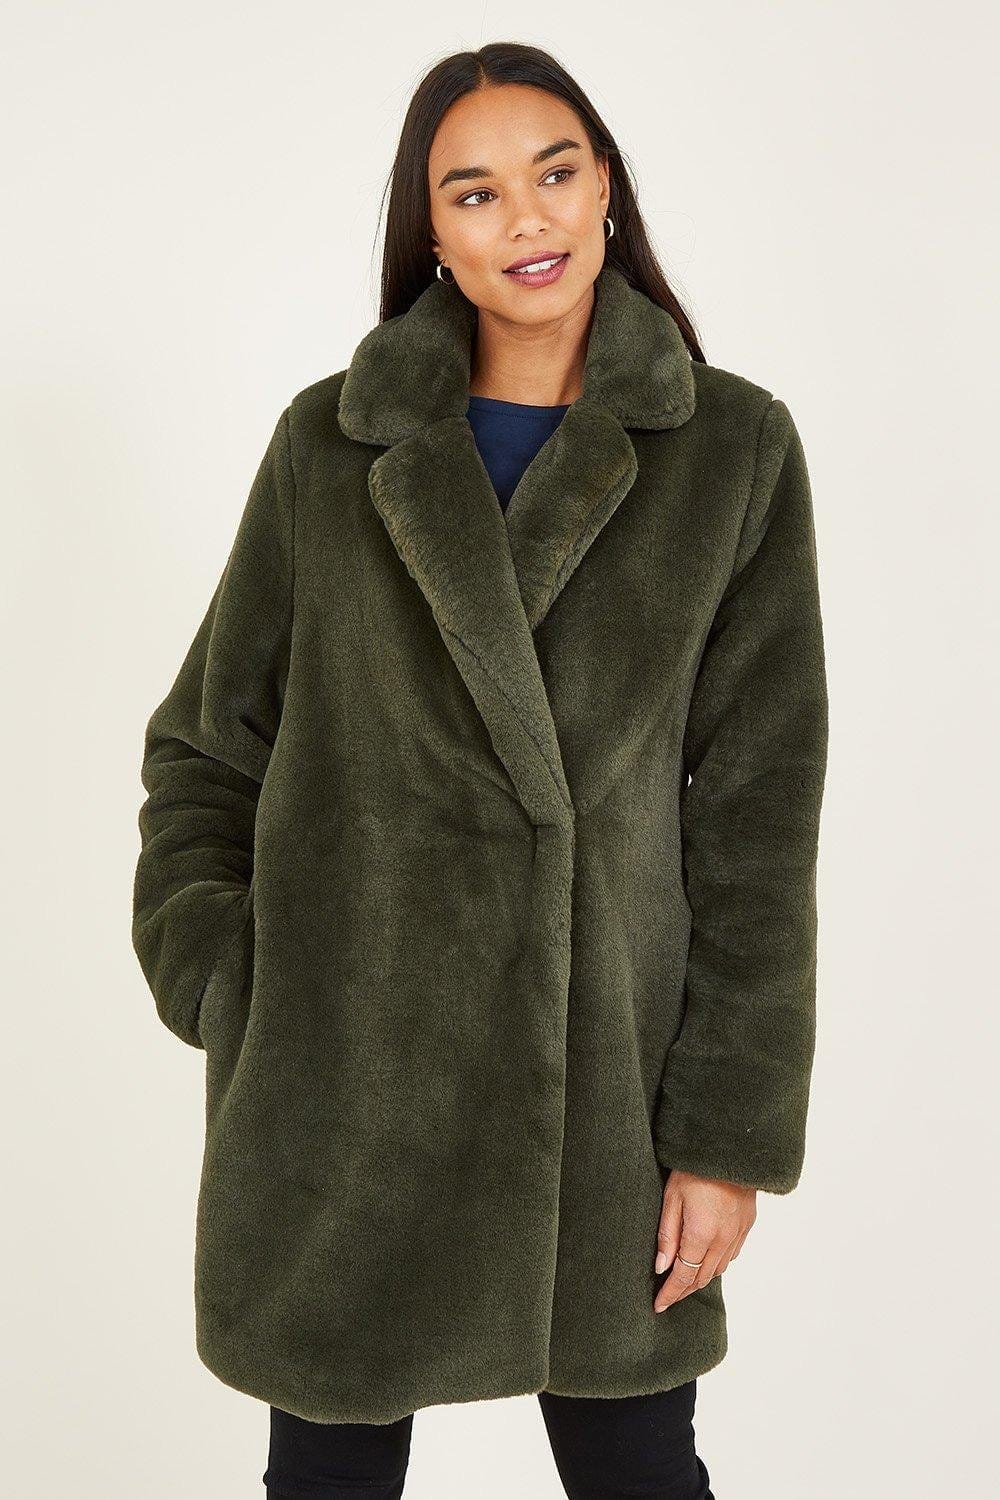 Green Faux Fur Coat